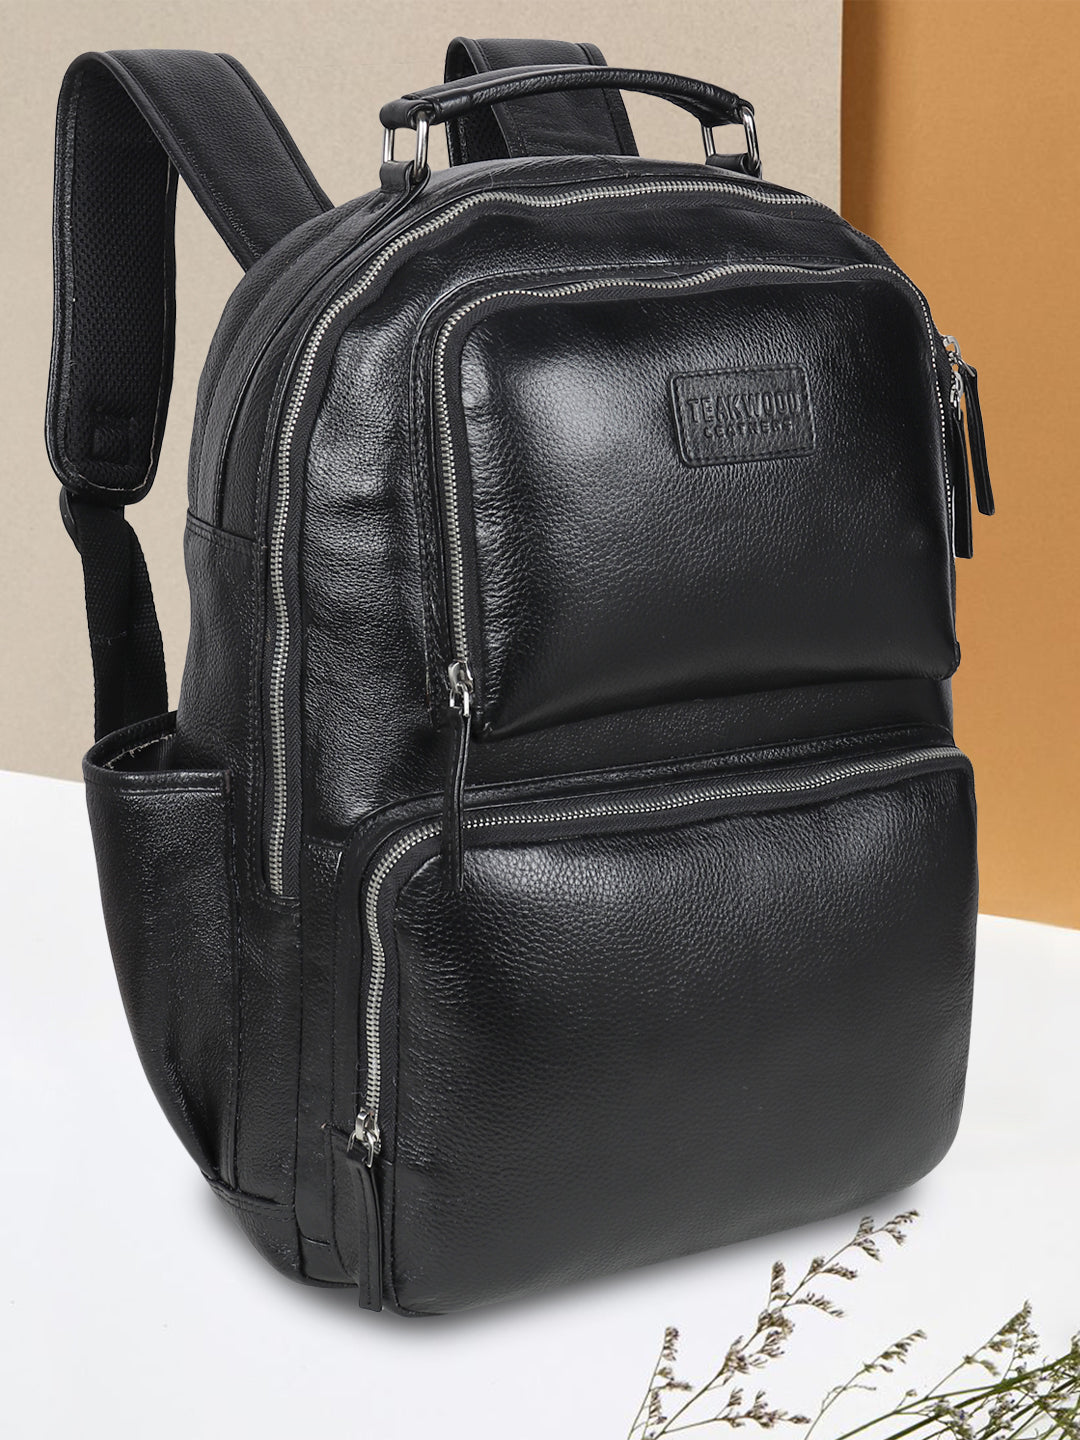 BELLA RUSSO Extra Large Purse TOTE LAPTOP BAG Shoulder Bag TRAVEL Grey 2  ZIPPERS | eBay